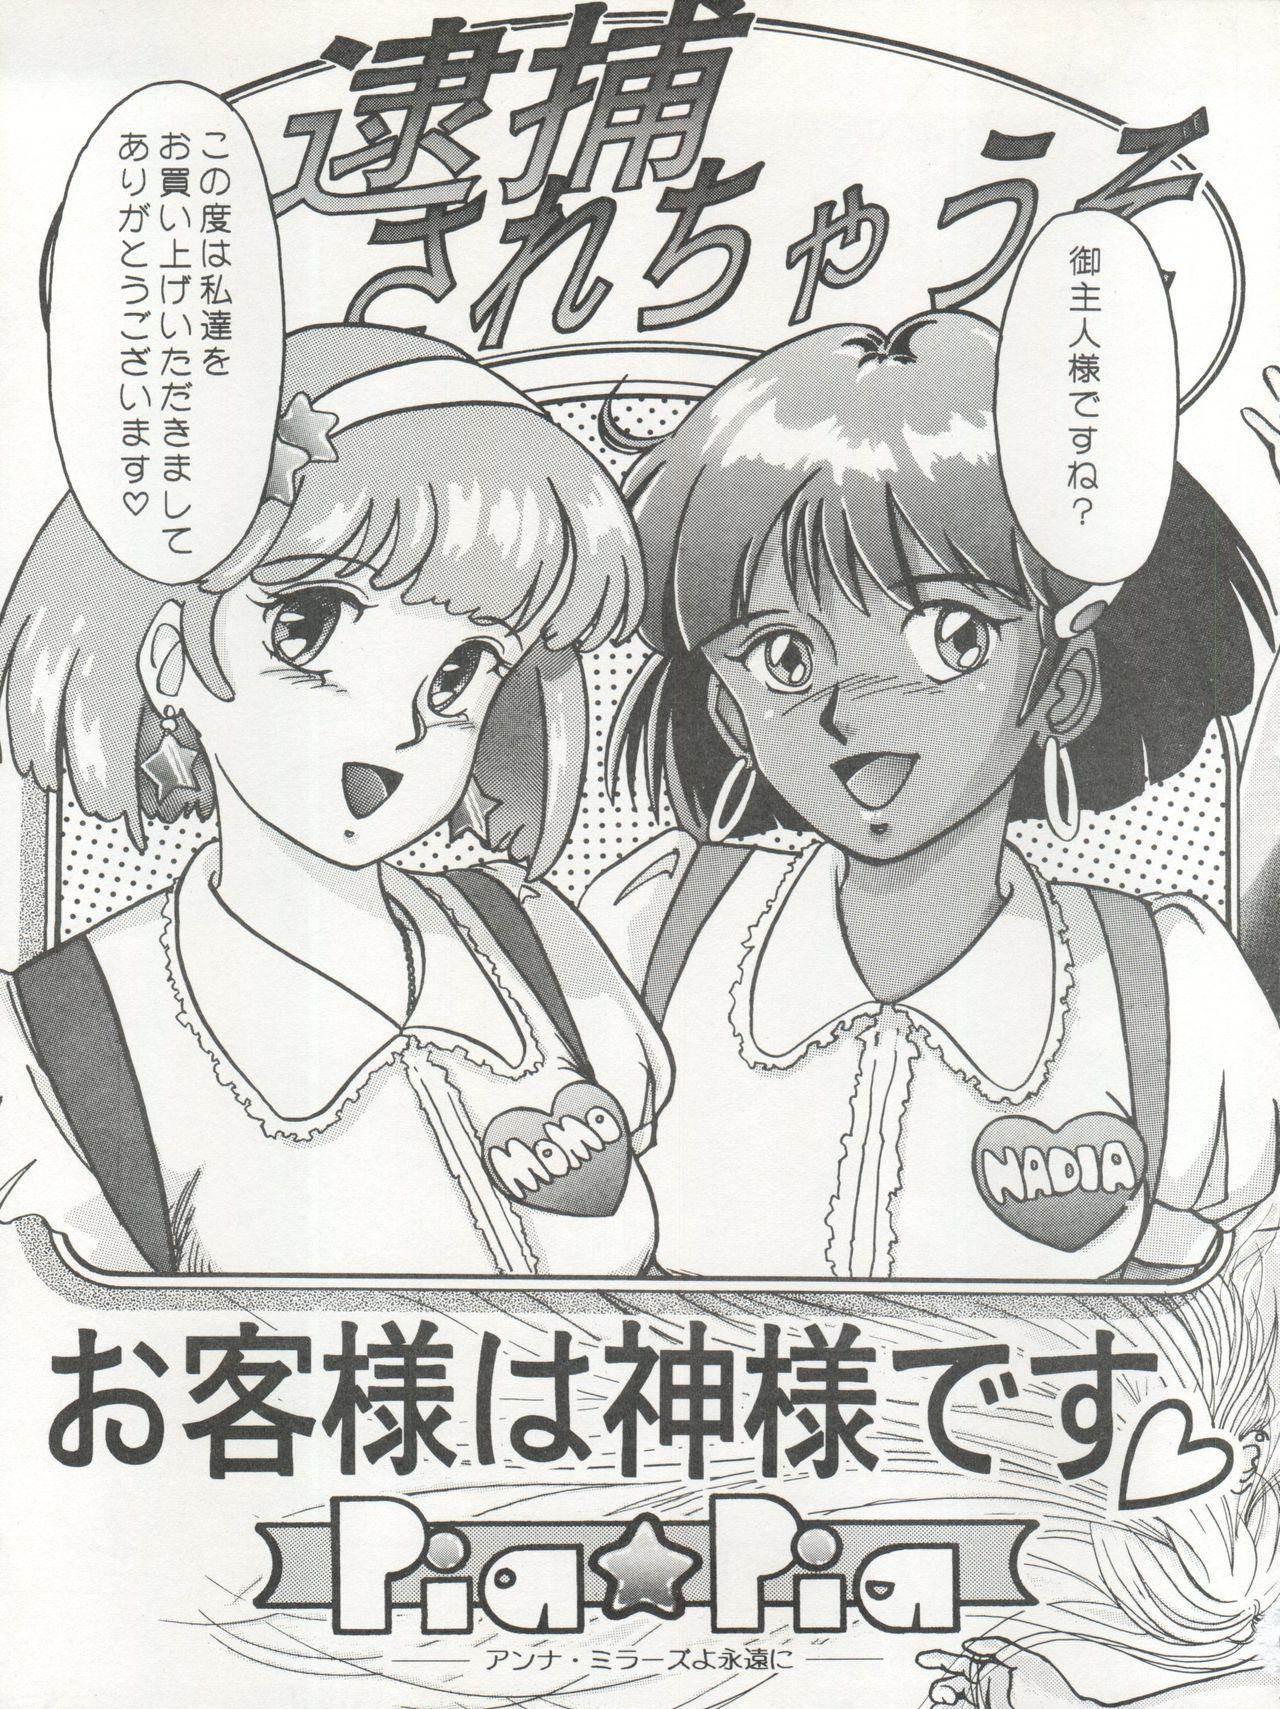 Hardsex 逮捕されちゃうぞ - Fushigi no umi no nadia Youre under arrest Minky momo 3x3 eyes Small - Page 3